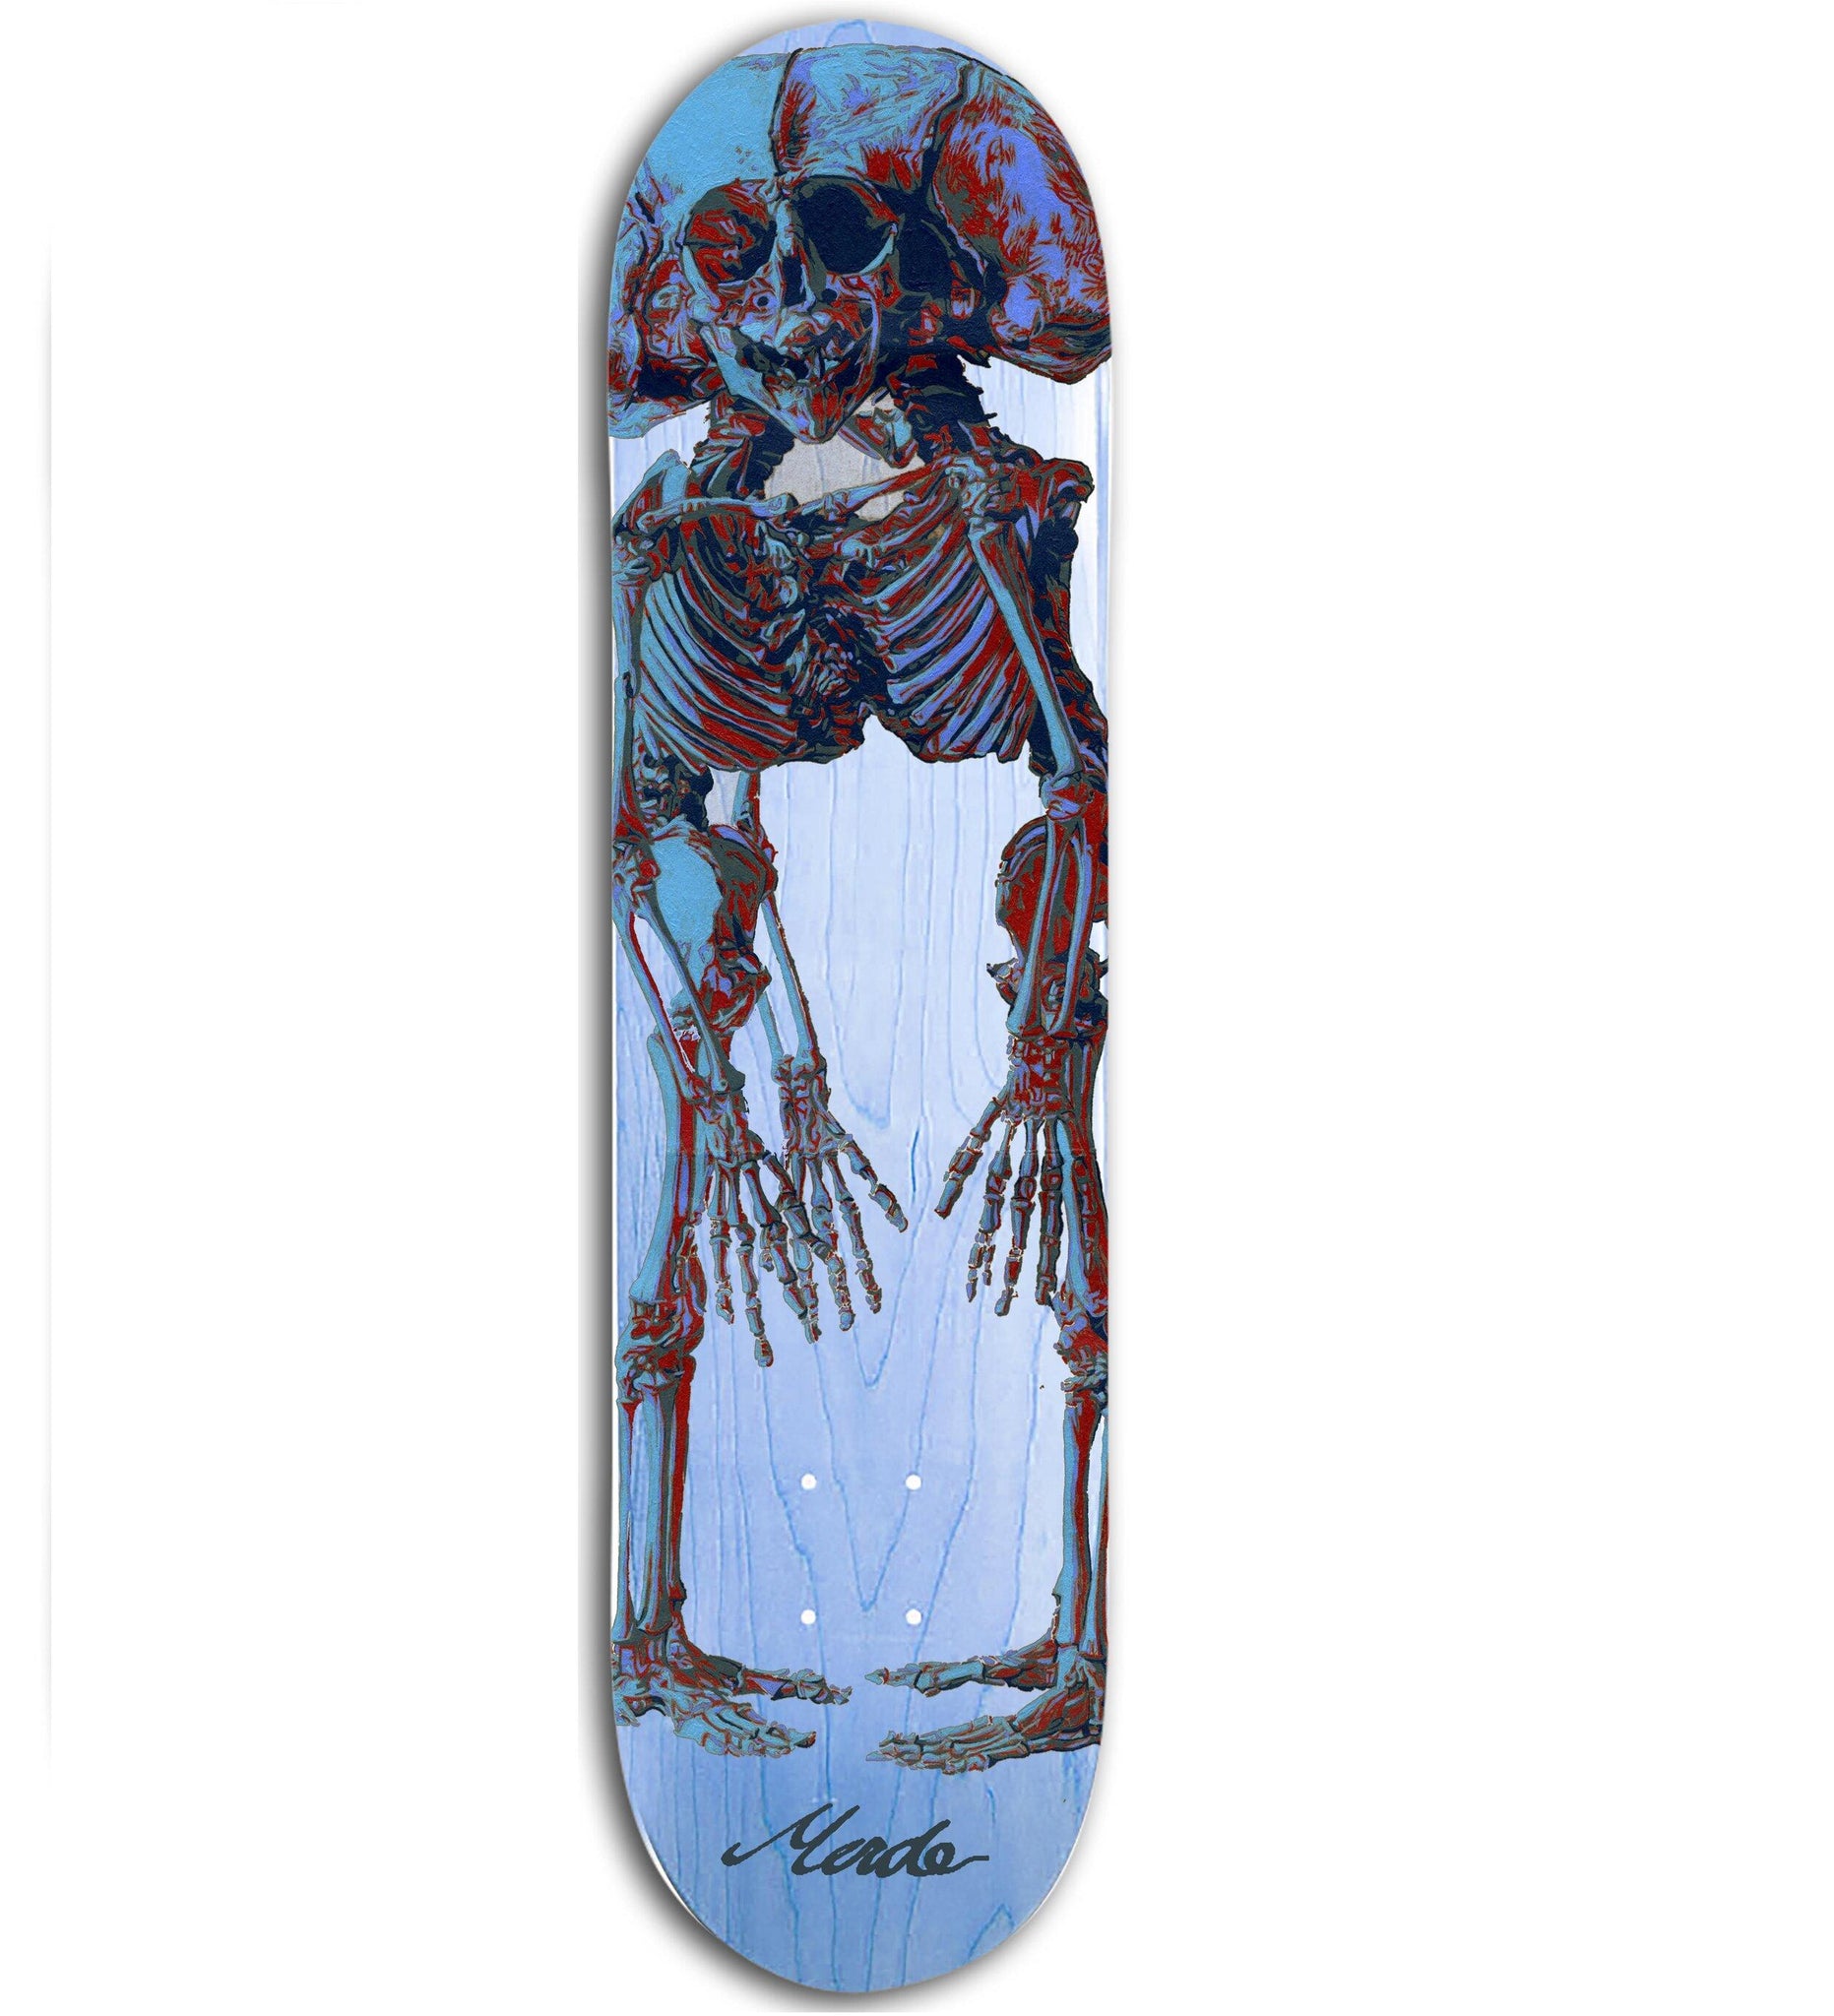 Merde Skateboards "Twins" Assorted Sized Deck